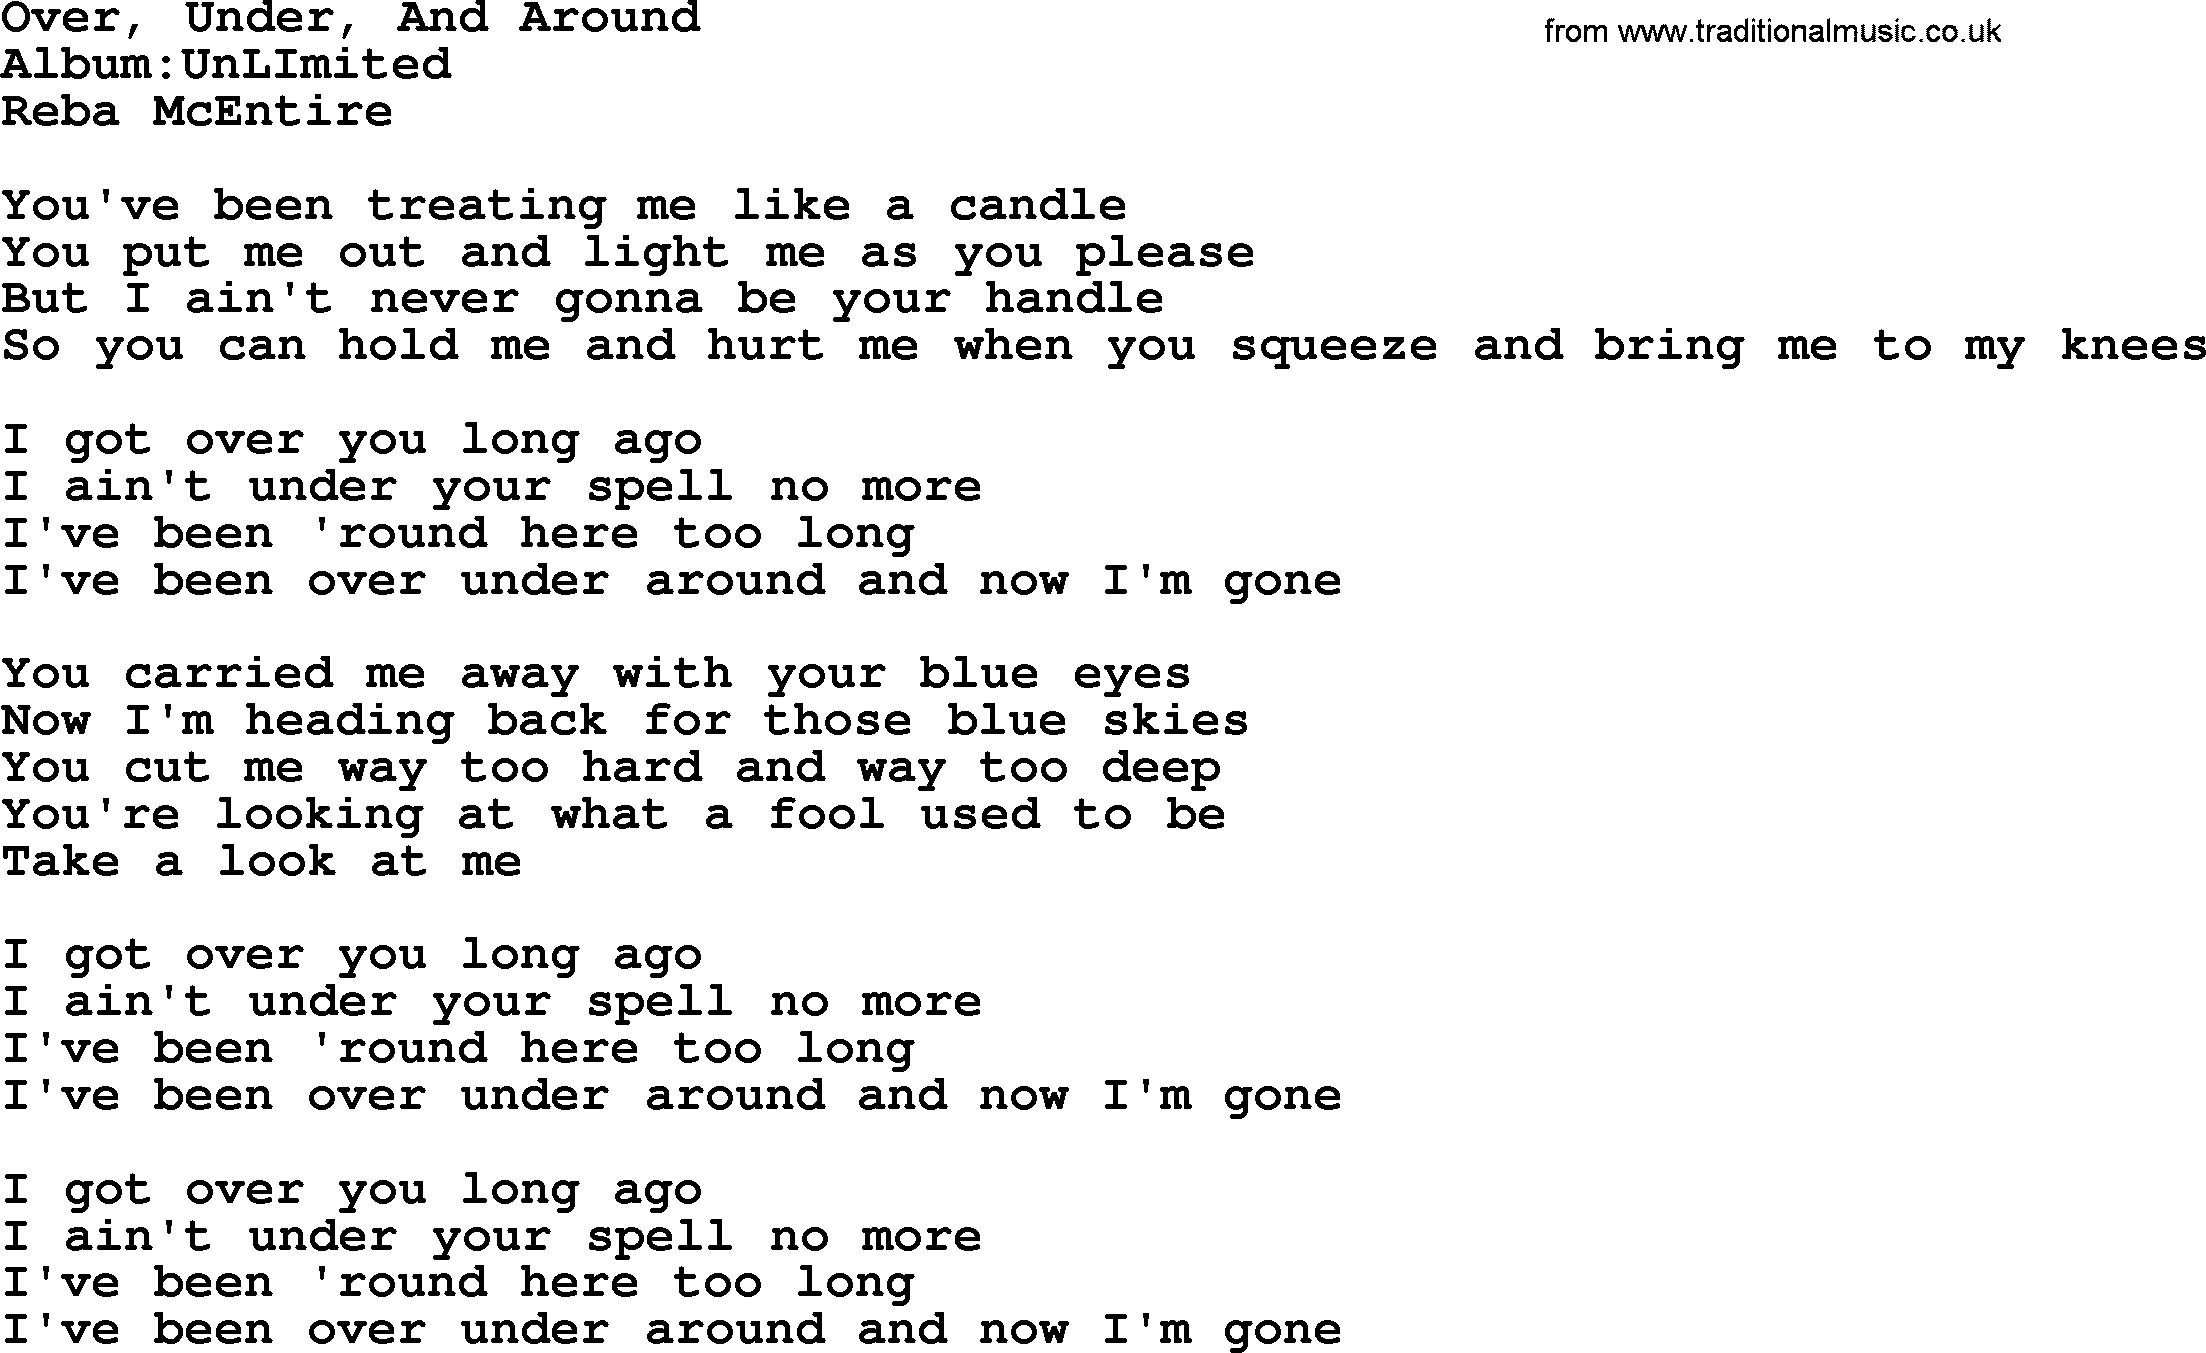 Reba McEntire song: Over, Under, And Around lyrics